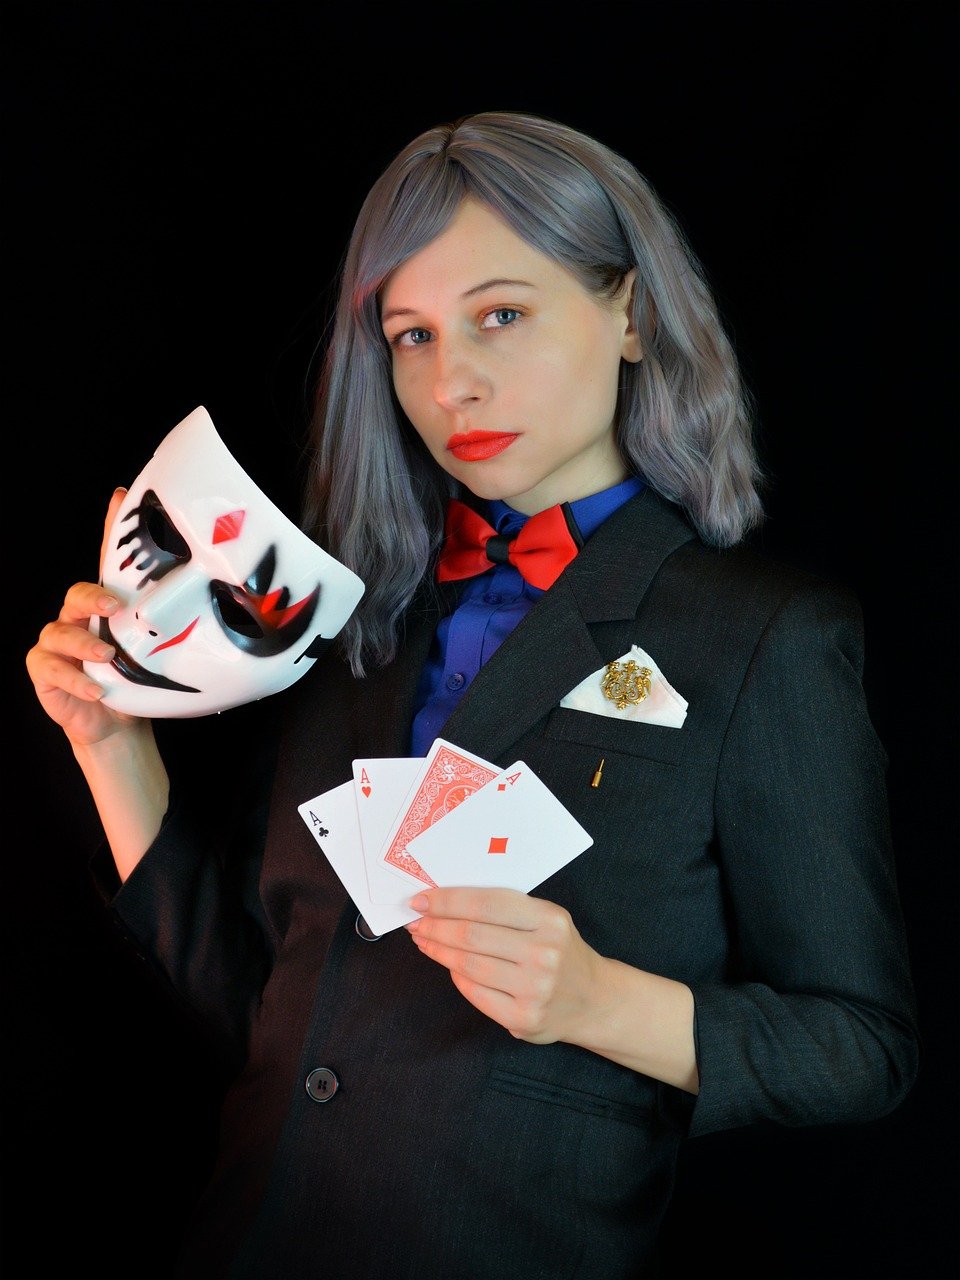 card player, masks, gambling-5864203.jpg